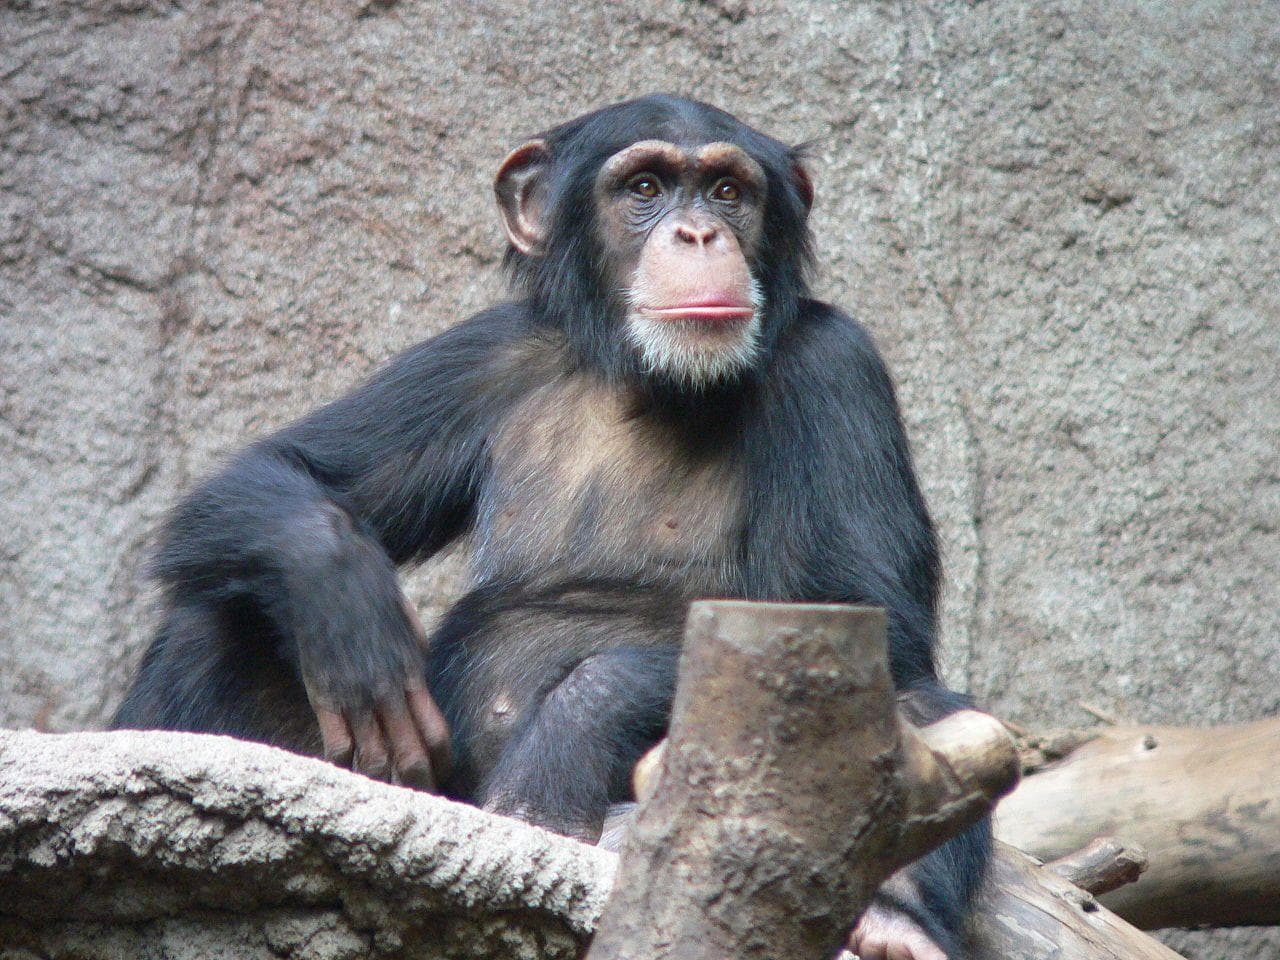 2009 chimpanzee attack travis